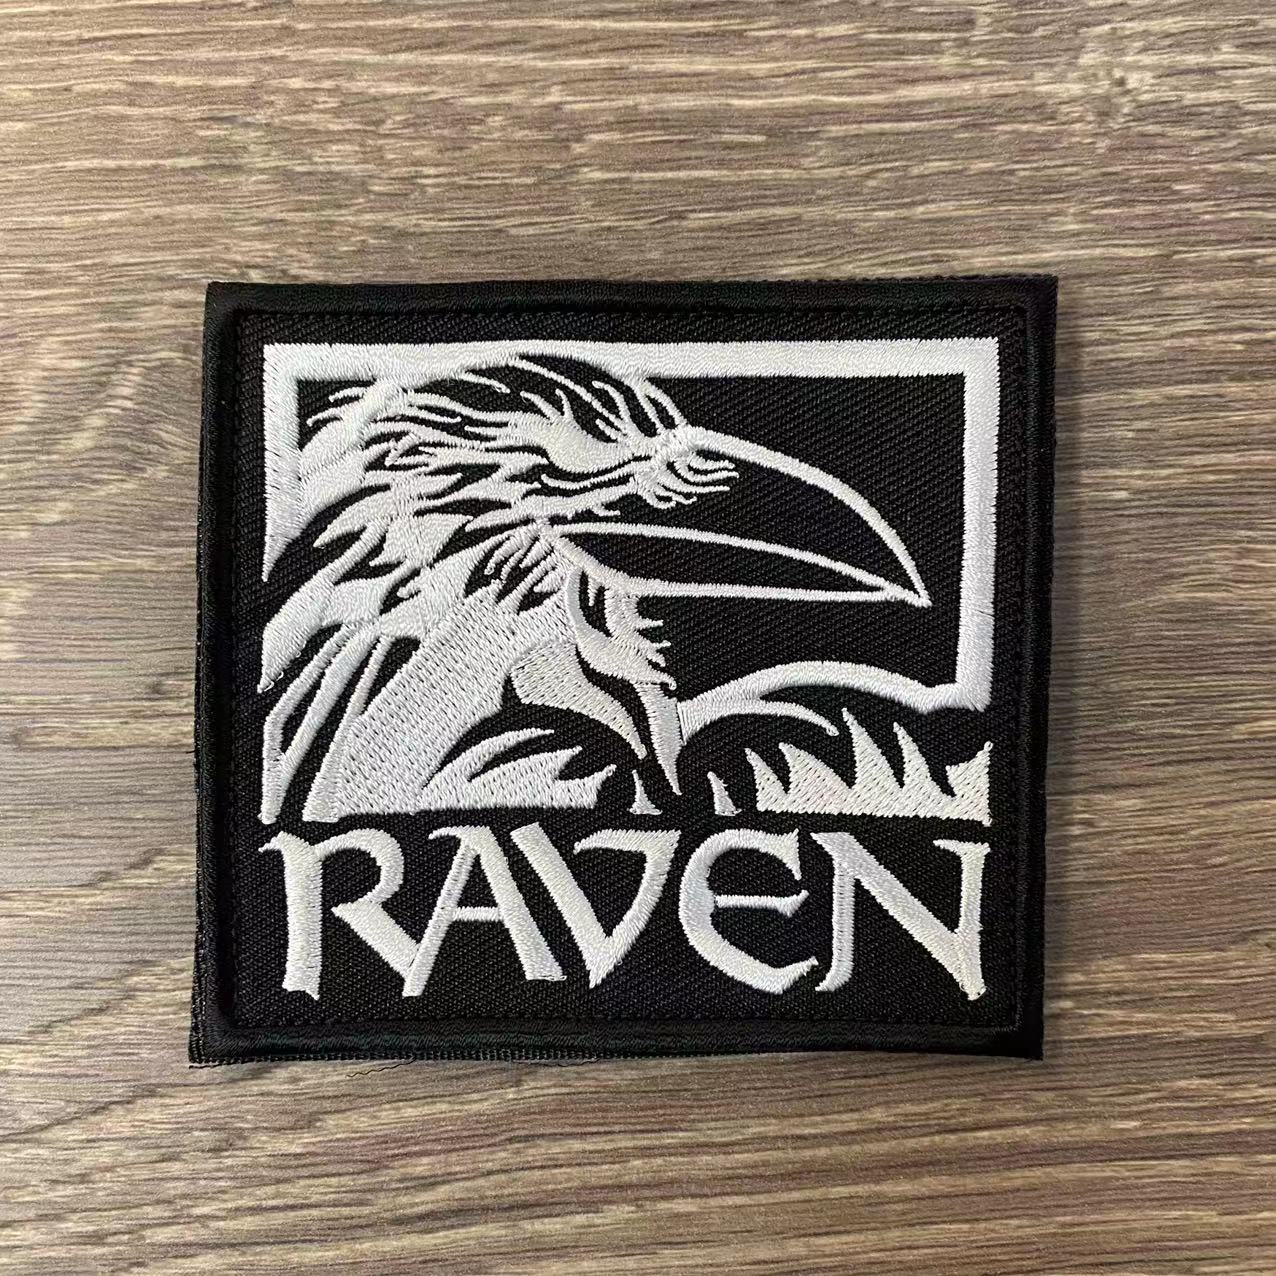 Raven Velcro Patch